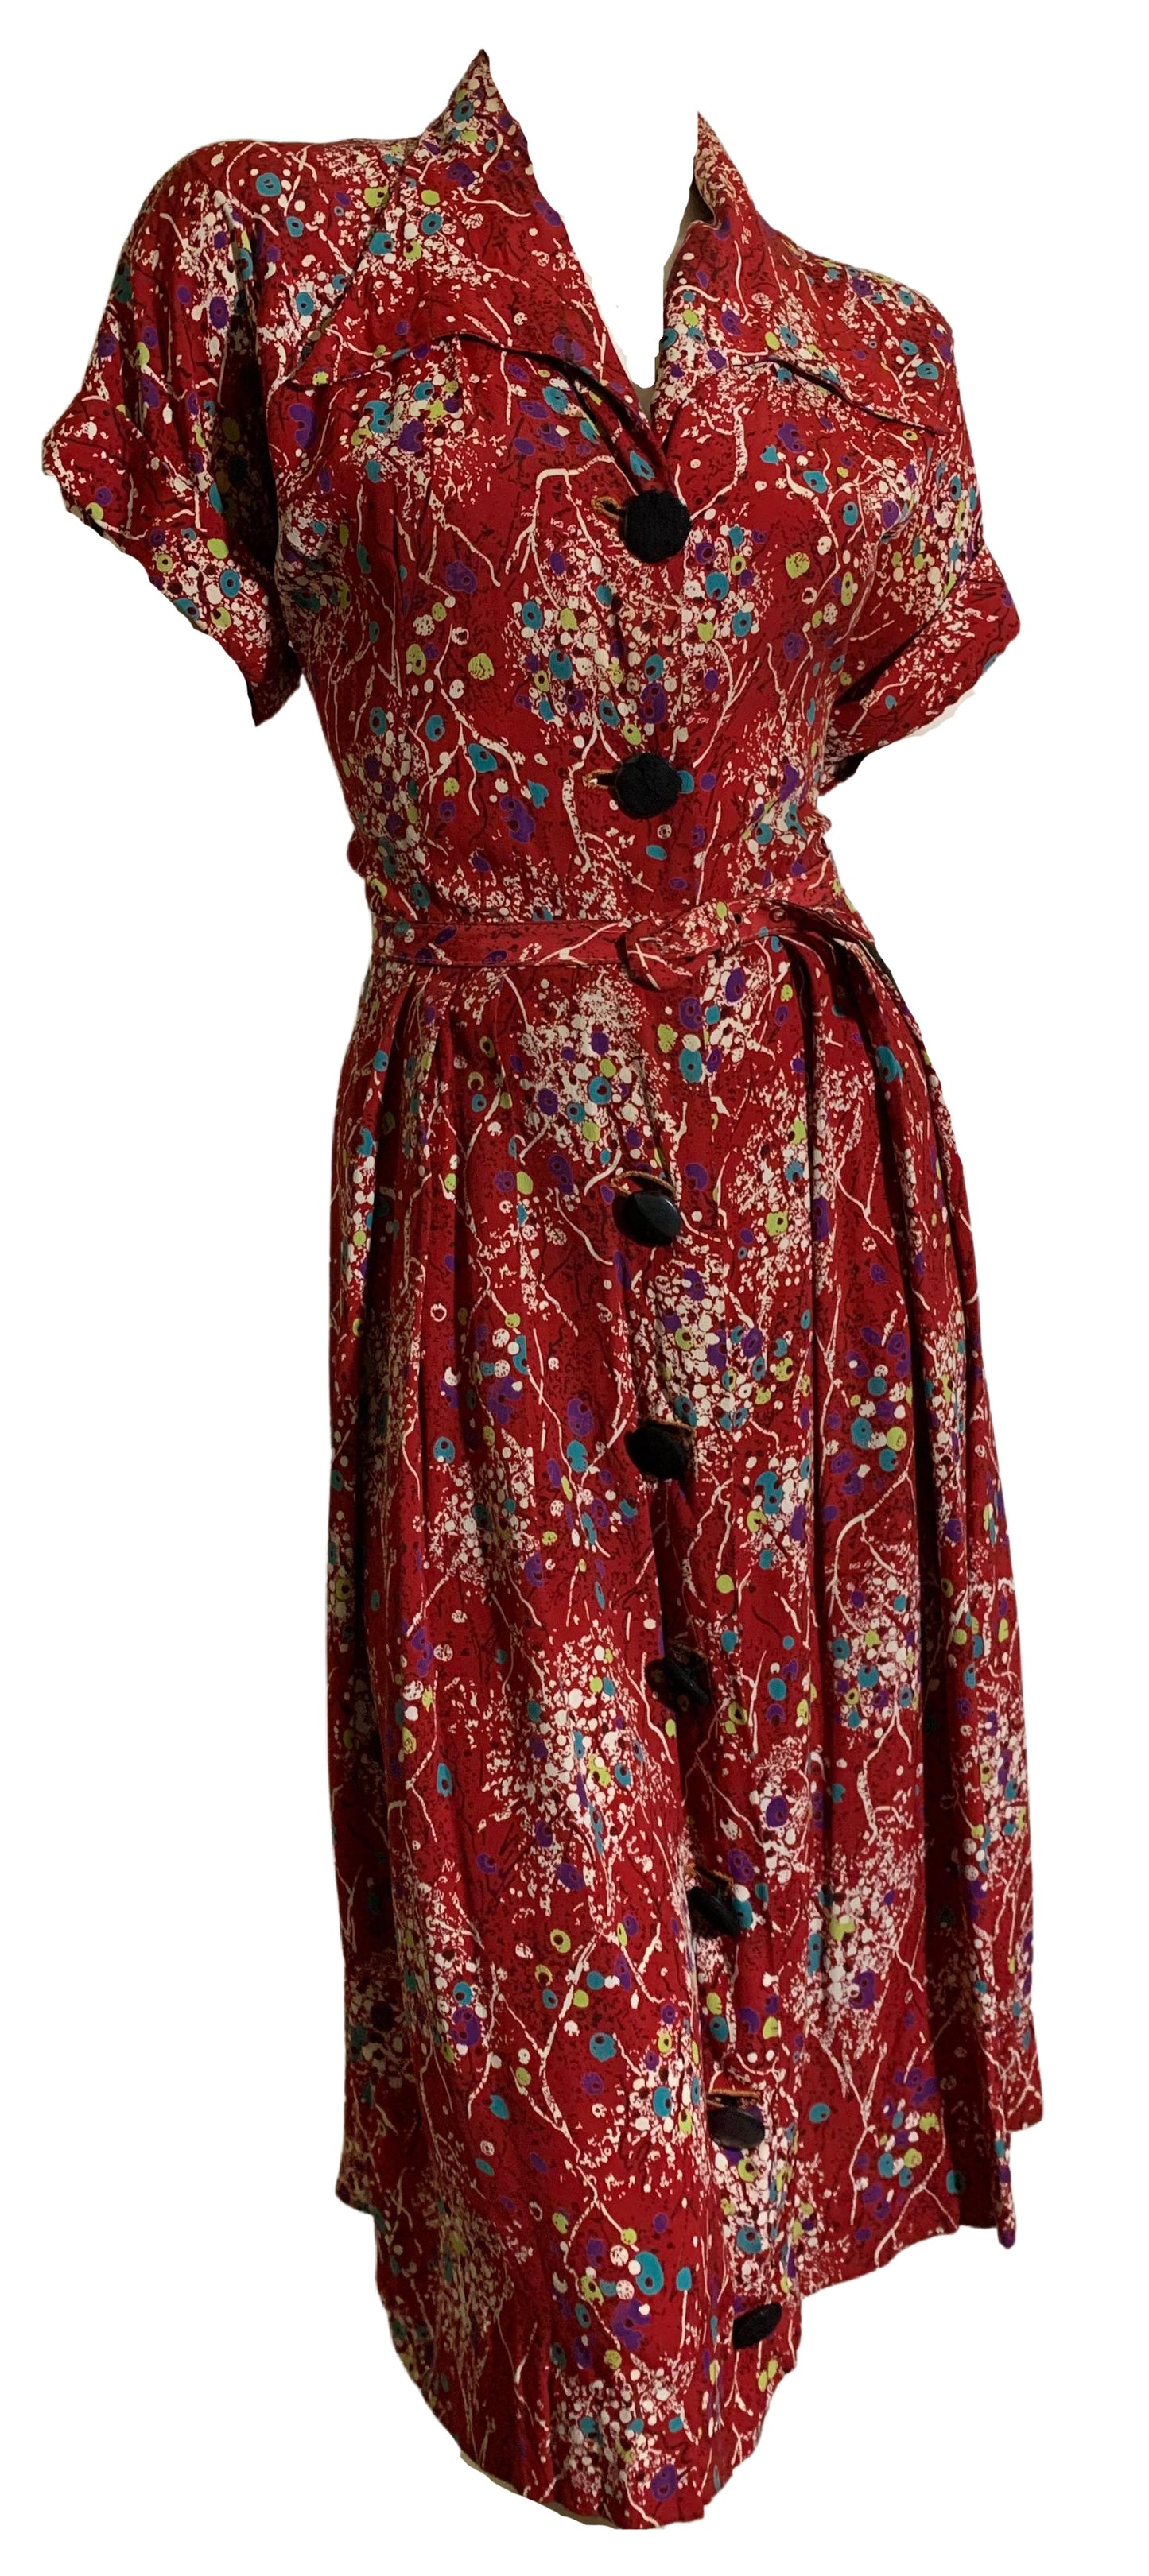 Pollock Meets Floral Print Red Crepe Rayon Dress circa 1940s